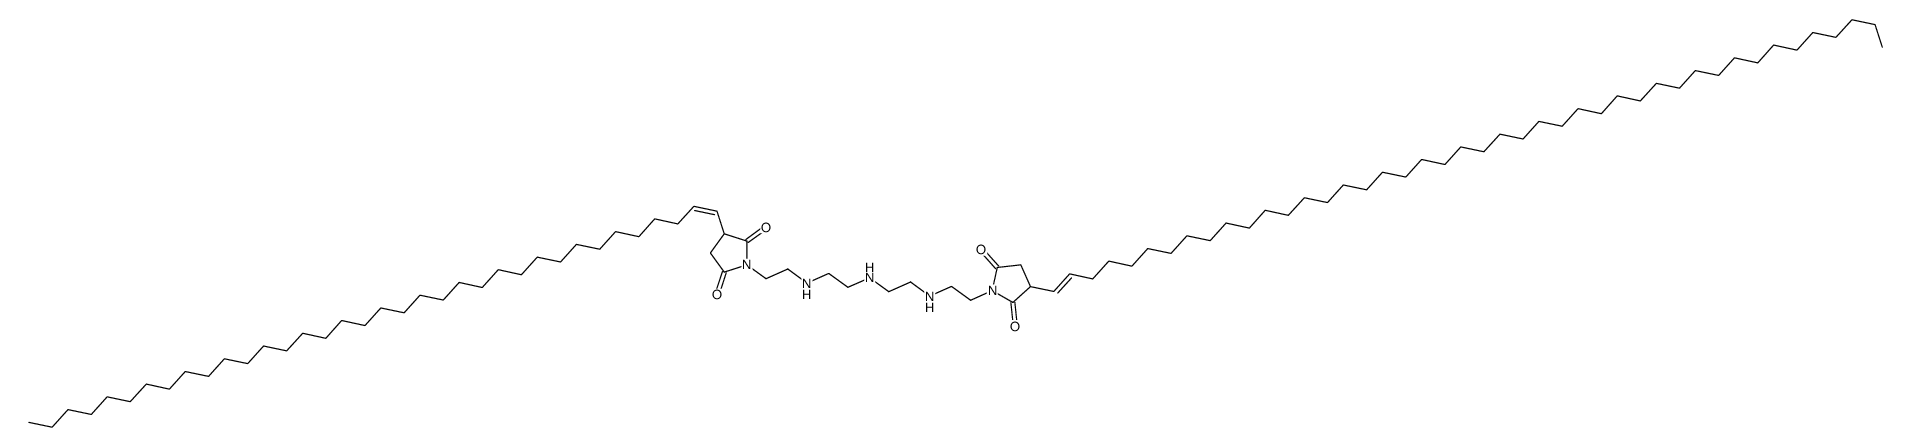 1-[2-[[2-[[2-[[2-[2,5-dioxo-3-(tetratetracontenyl)-1-pyrrolidinyl]ethyl]amino]ethyl]amino]ethyl]amino]ethyl]-3-(hexatriacontenyl)pyrrolidine-2,5-dione picture